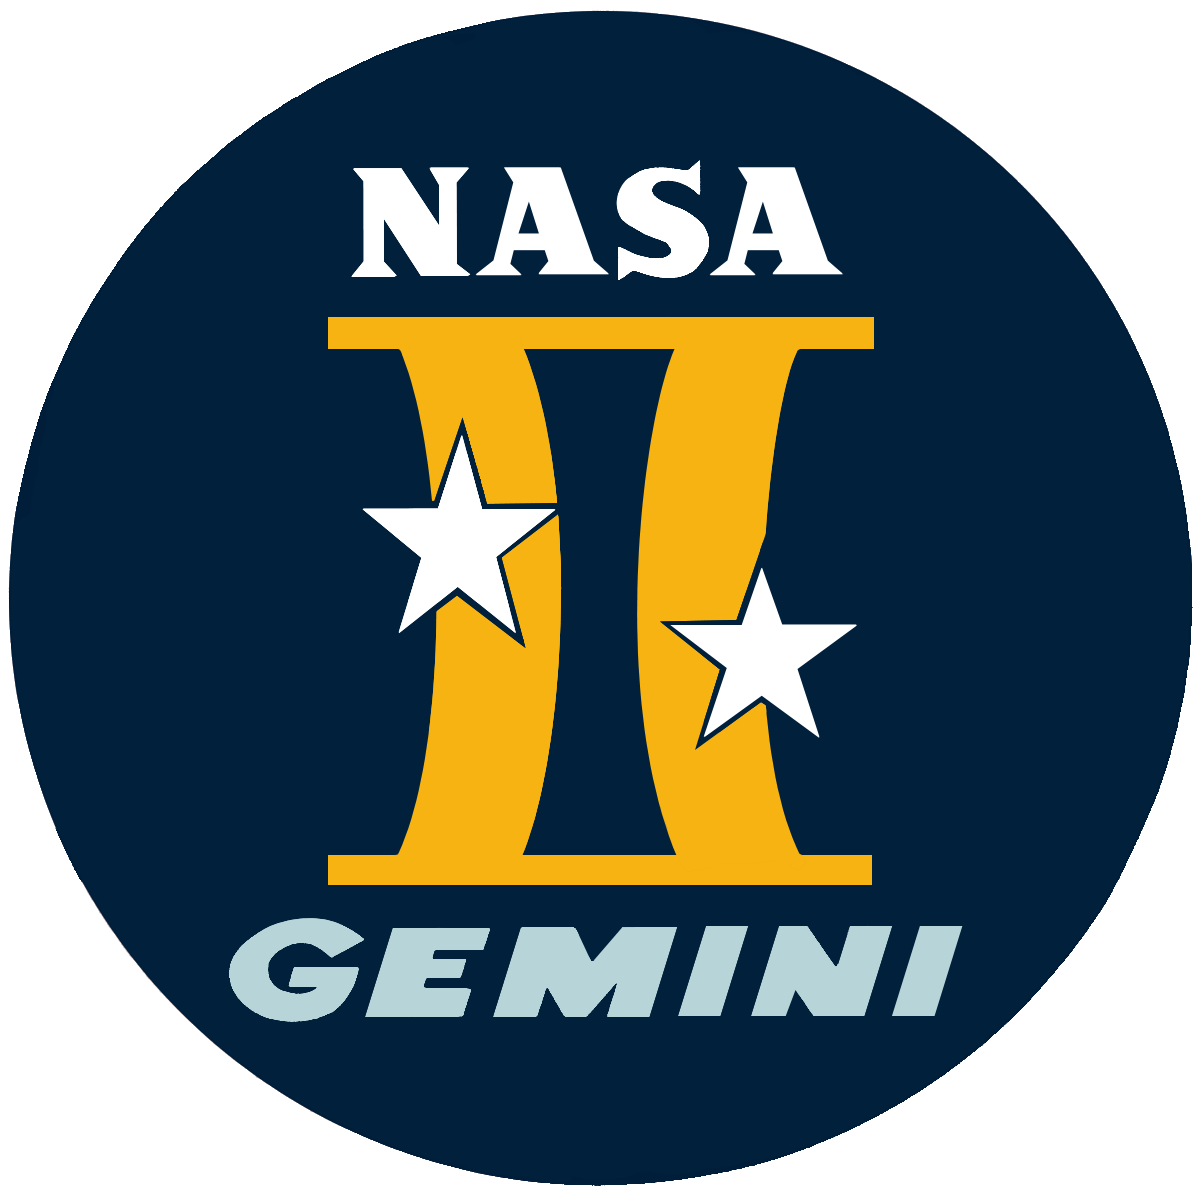 Saturn V NASA Logo - Project Gemini